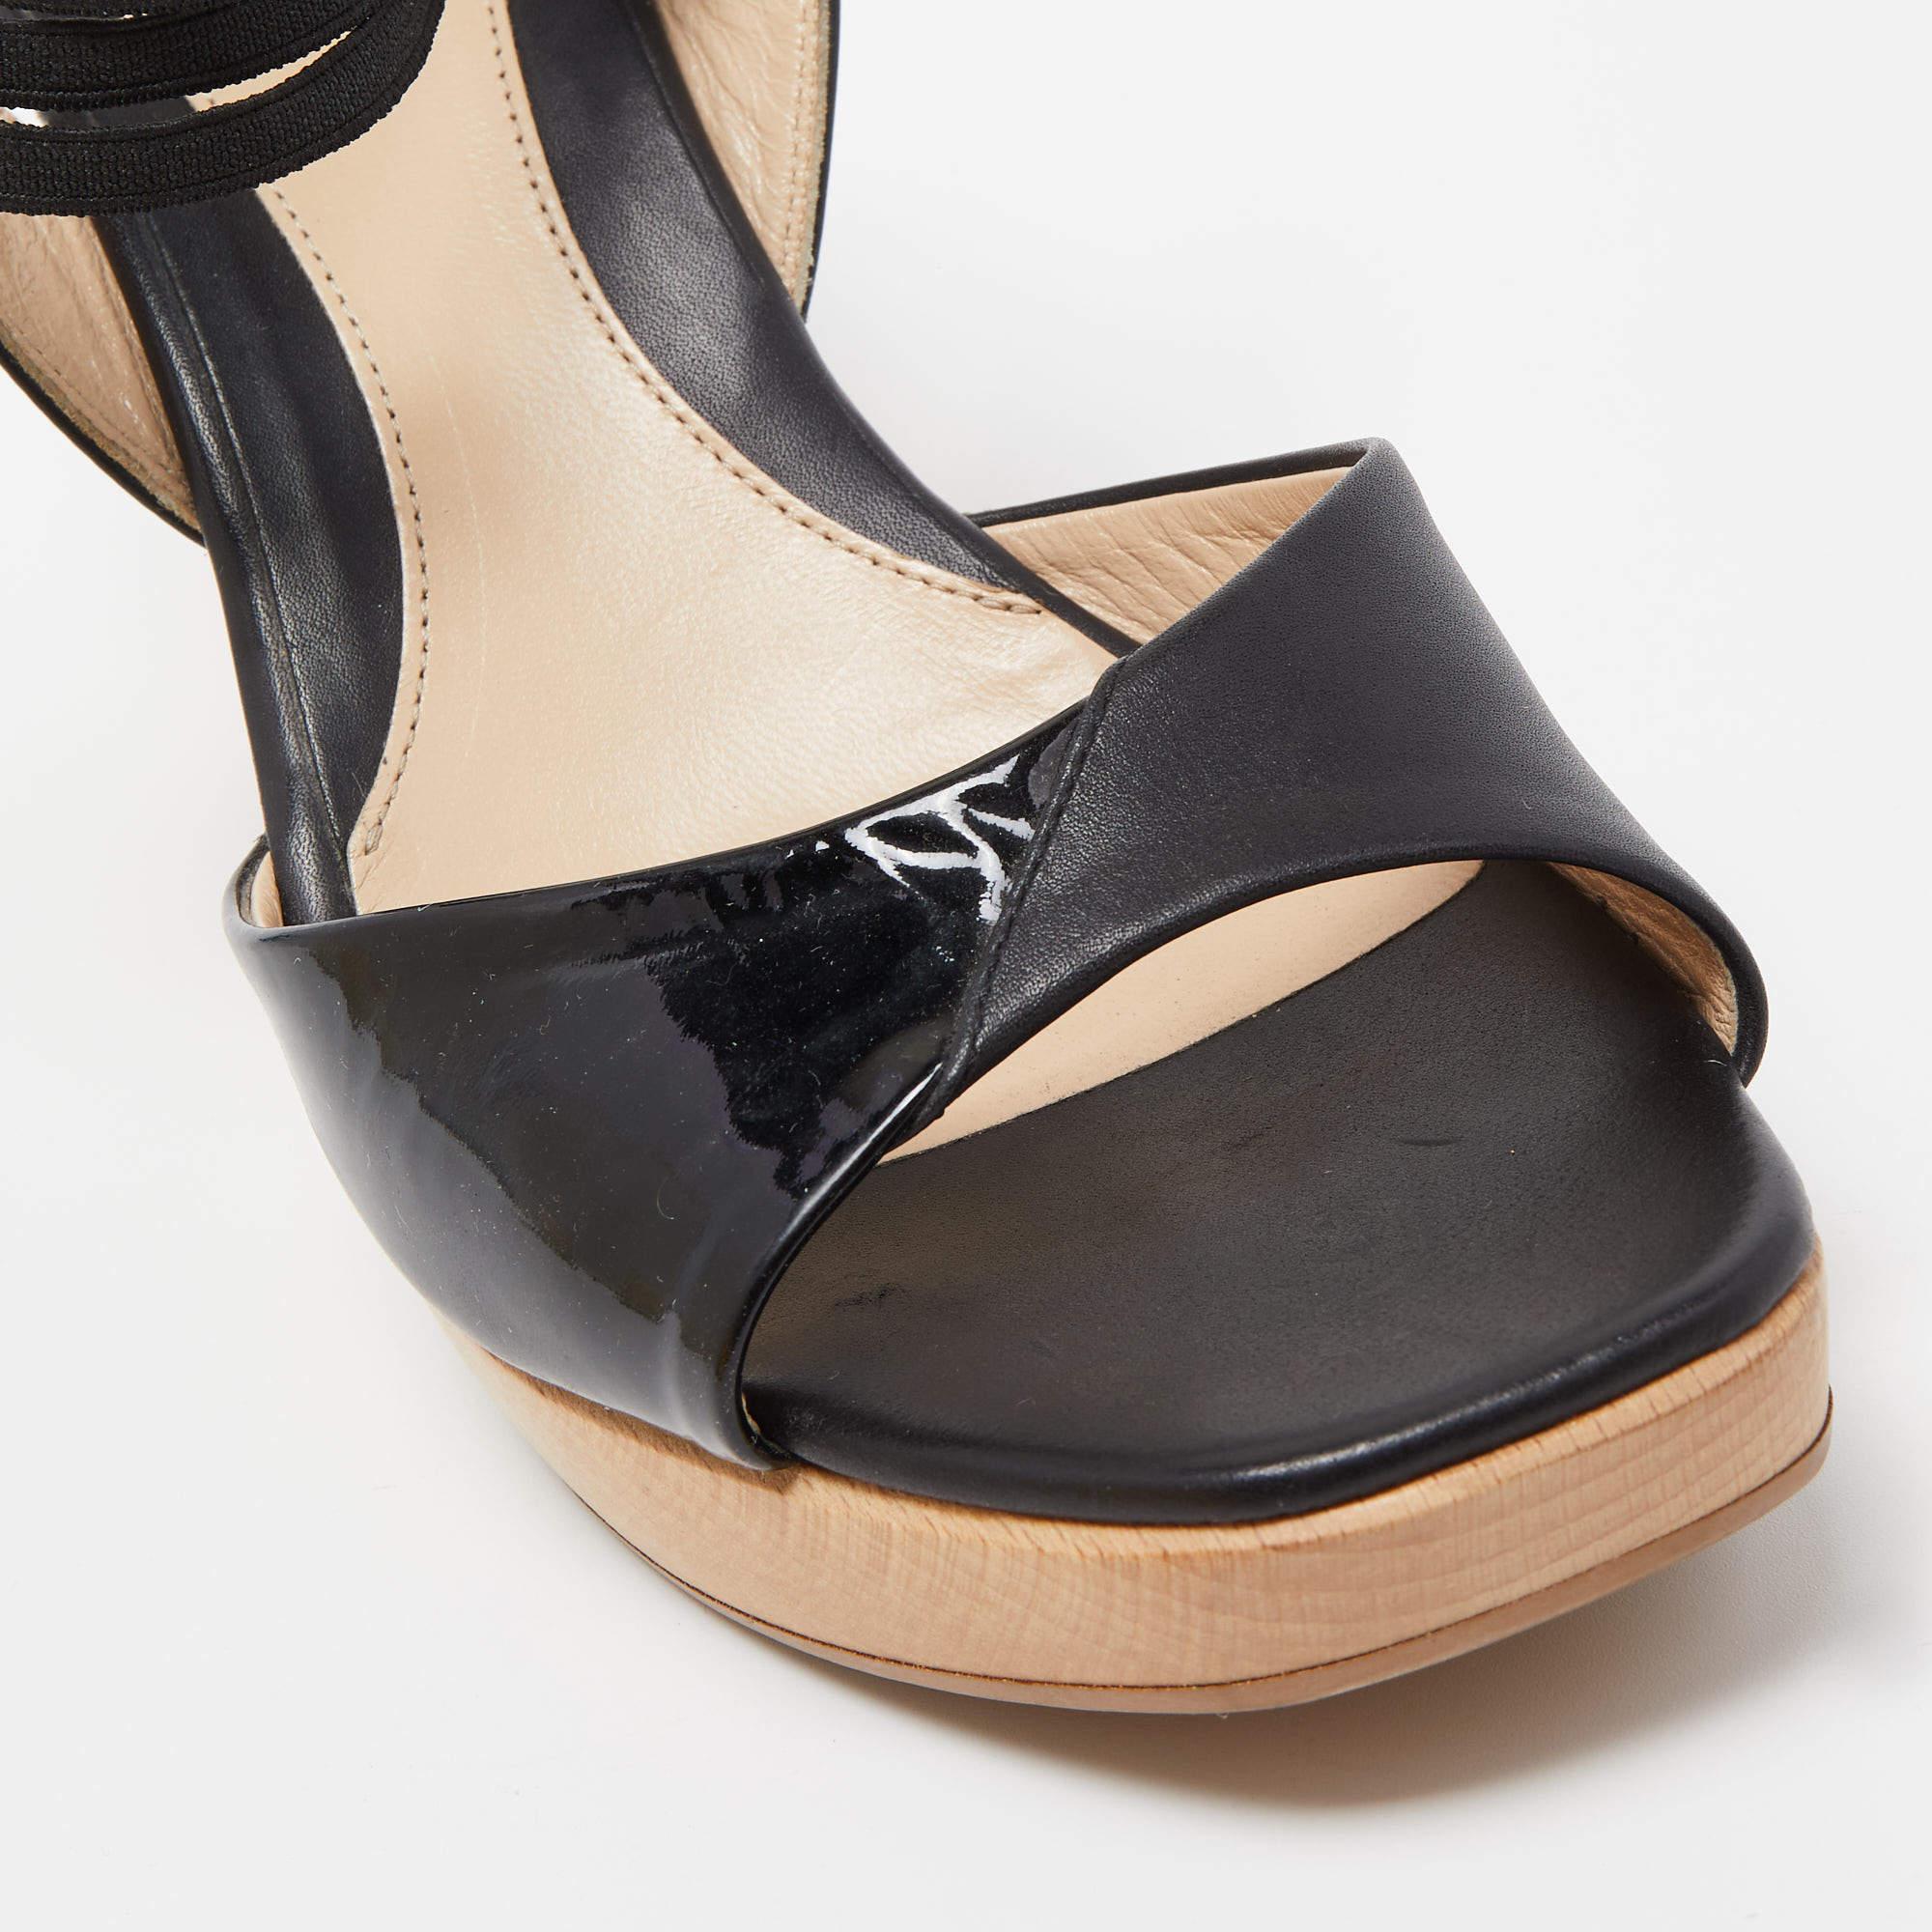 Fendi Black Leather Open Toe Platform Ankle Strap Sandals Size 40 For Sale 3